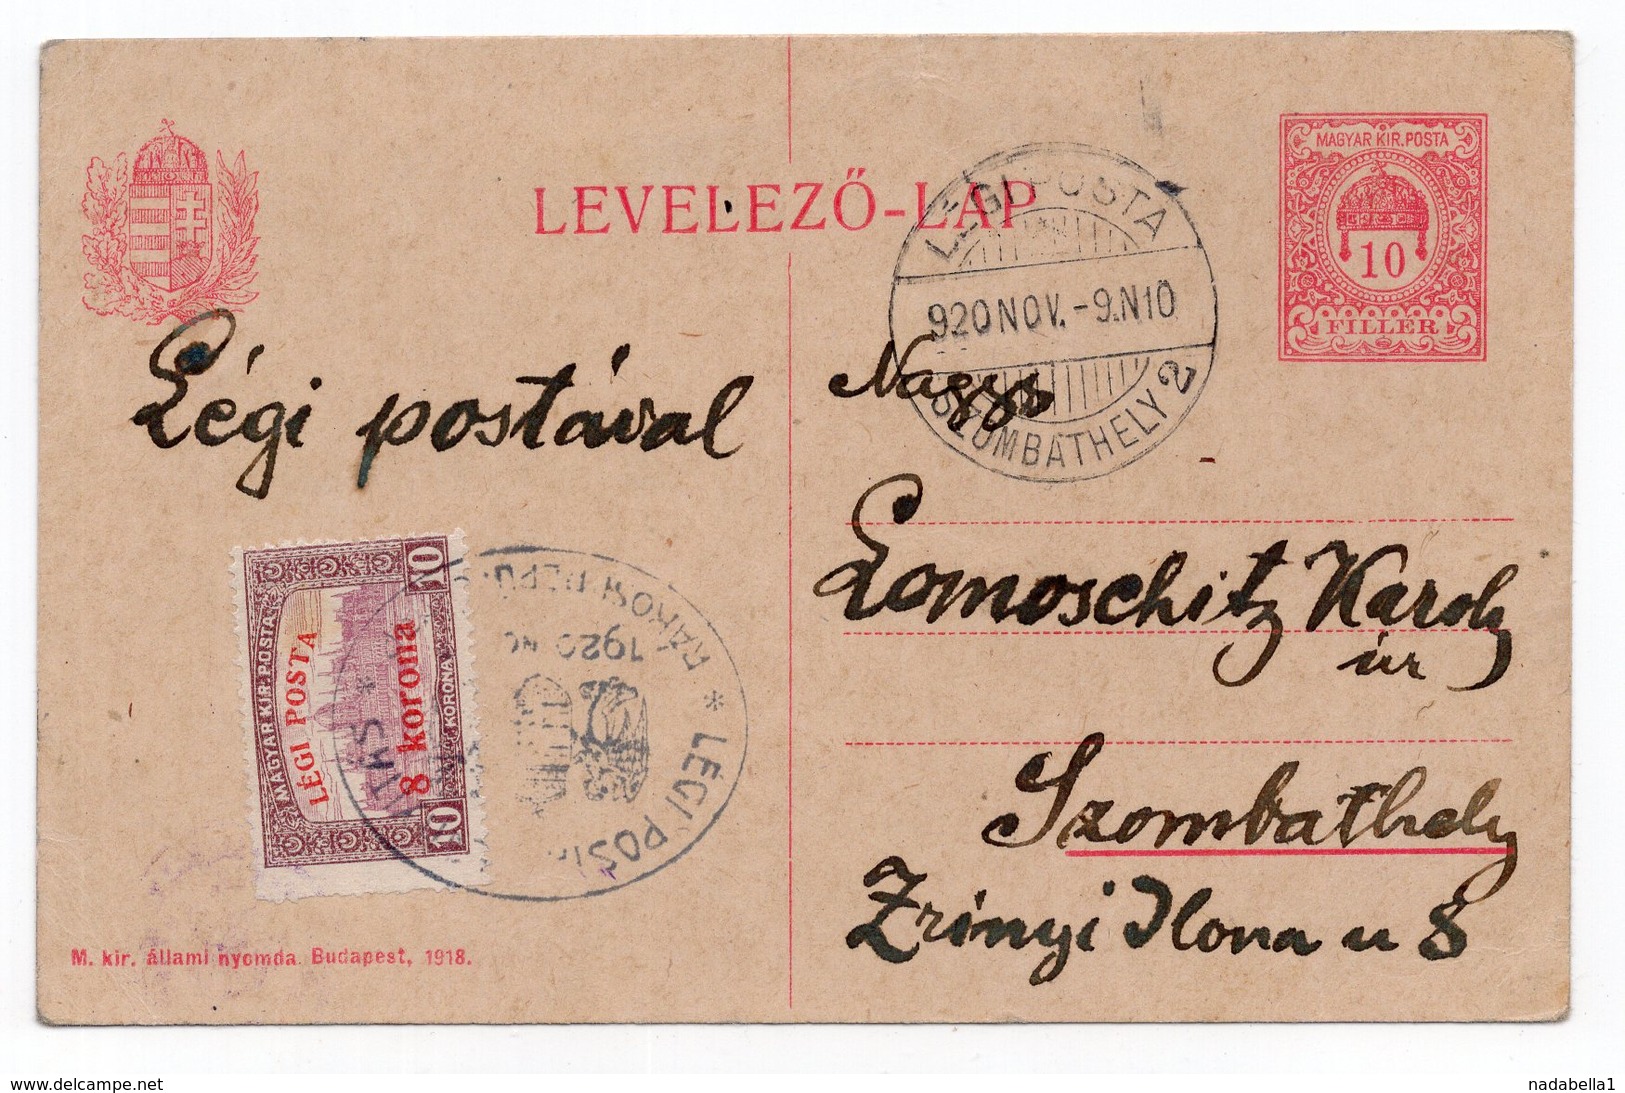 09.11.1920 HUNGARY, LEGI POSTA, STATIONERY CARD, USED - Postal Stationery